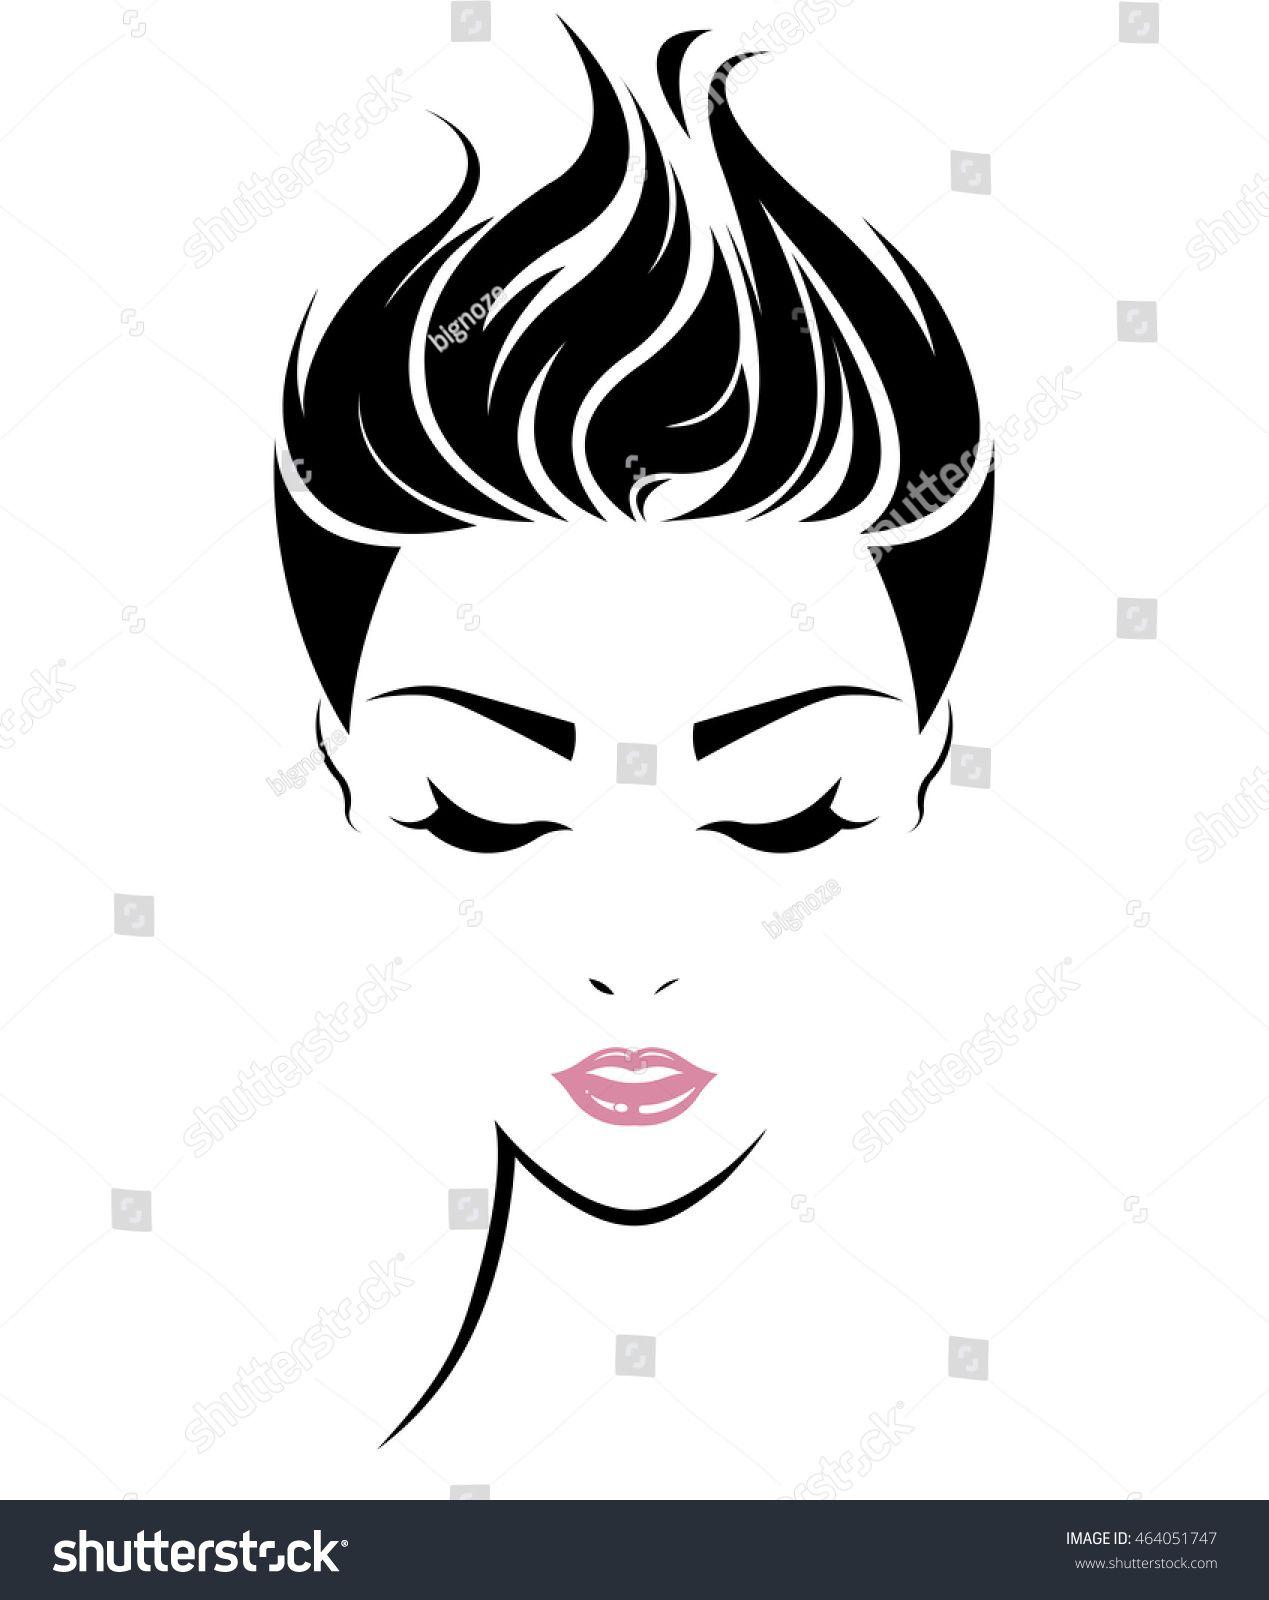 Woman Face Logo - illustration of women short hair style icon, logo women face